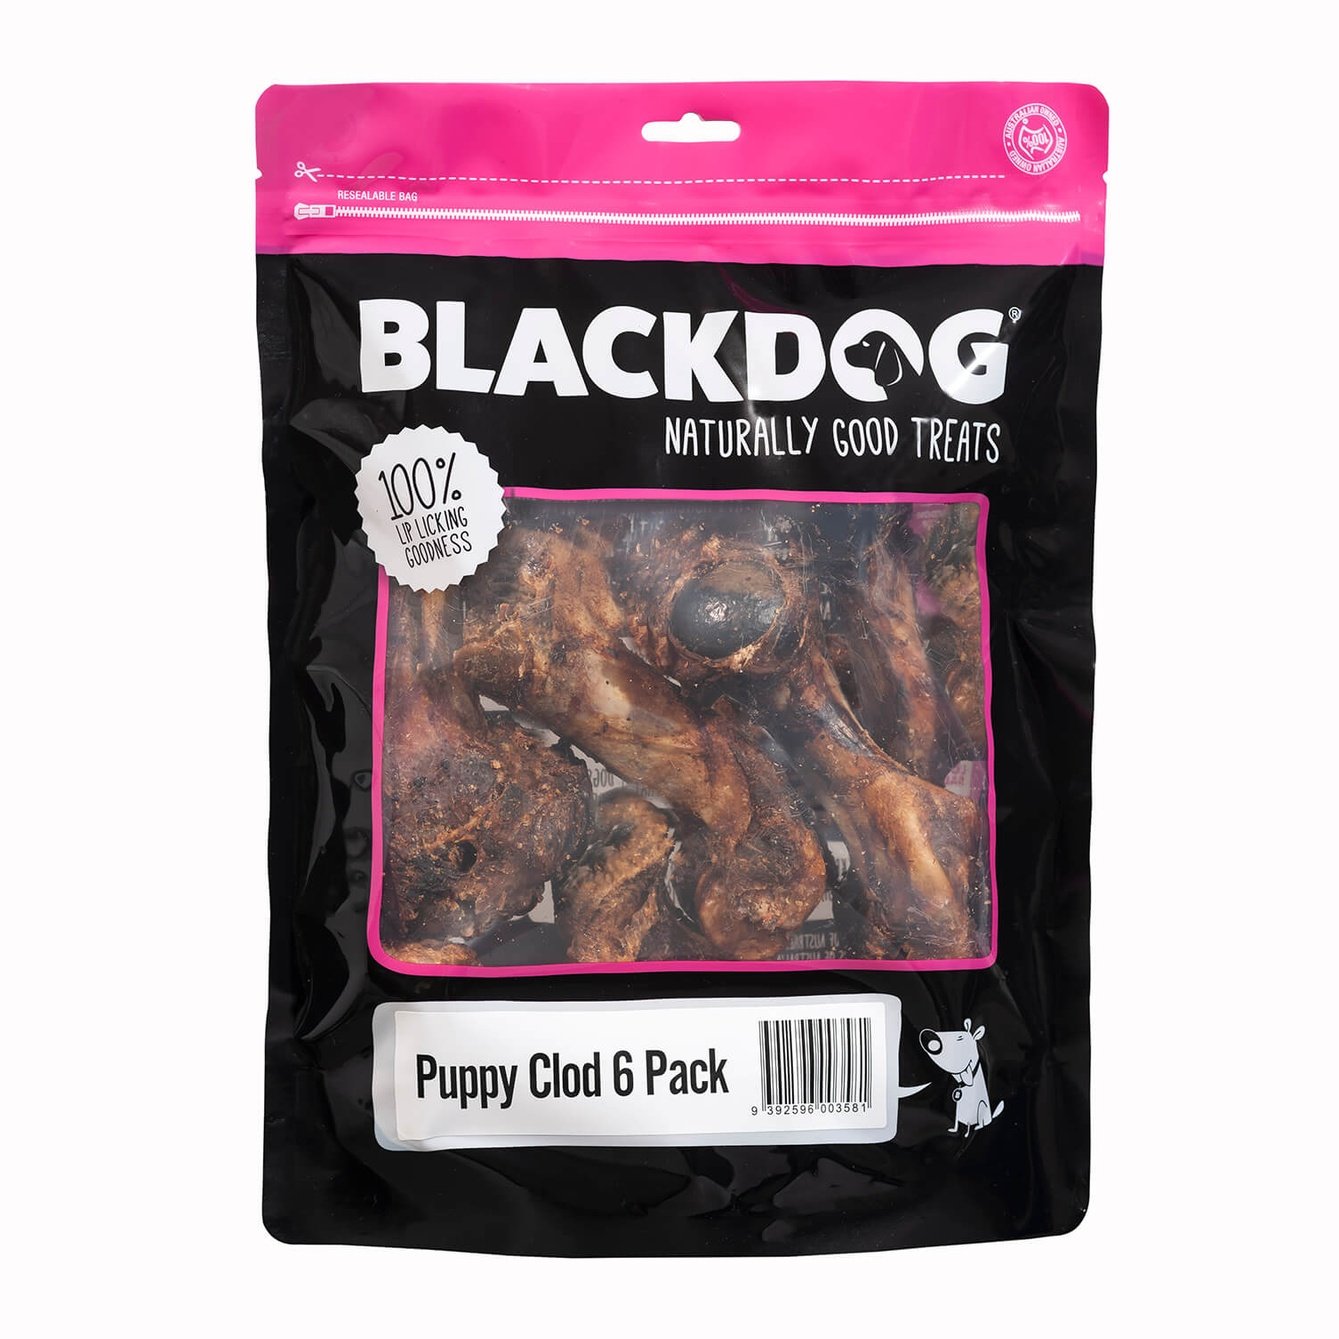 Blackdog Puppy Clod Dog Treat 6 Pack